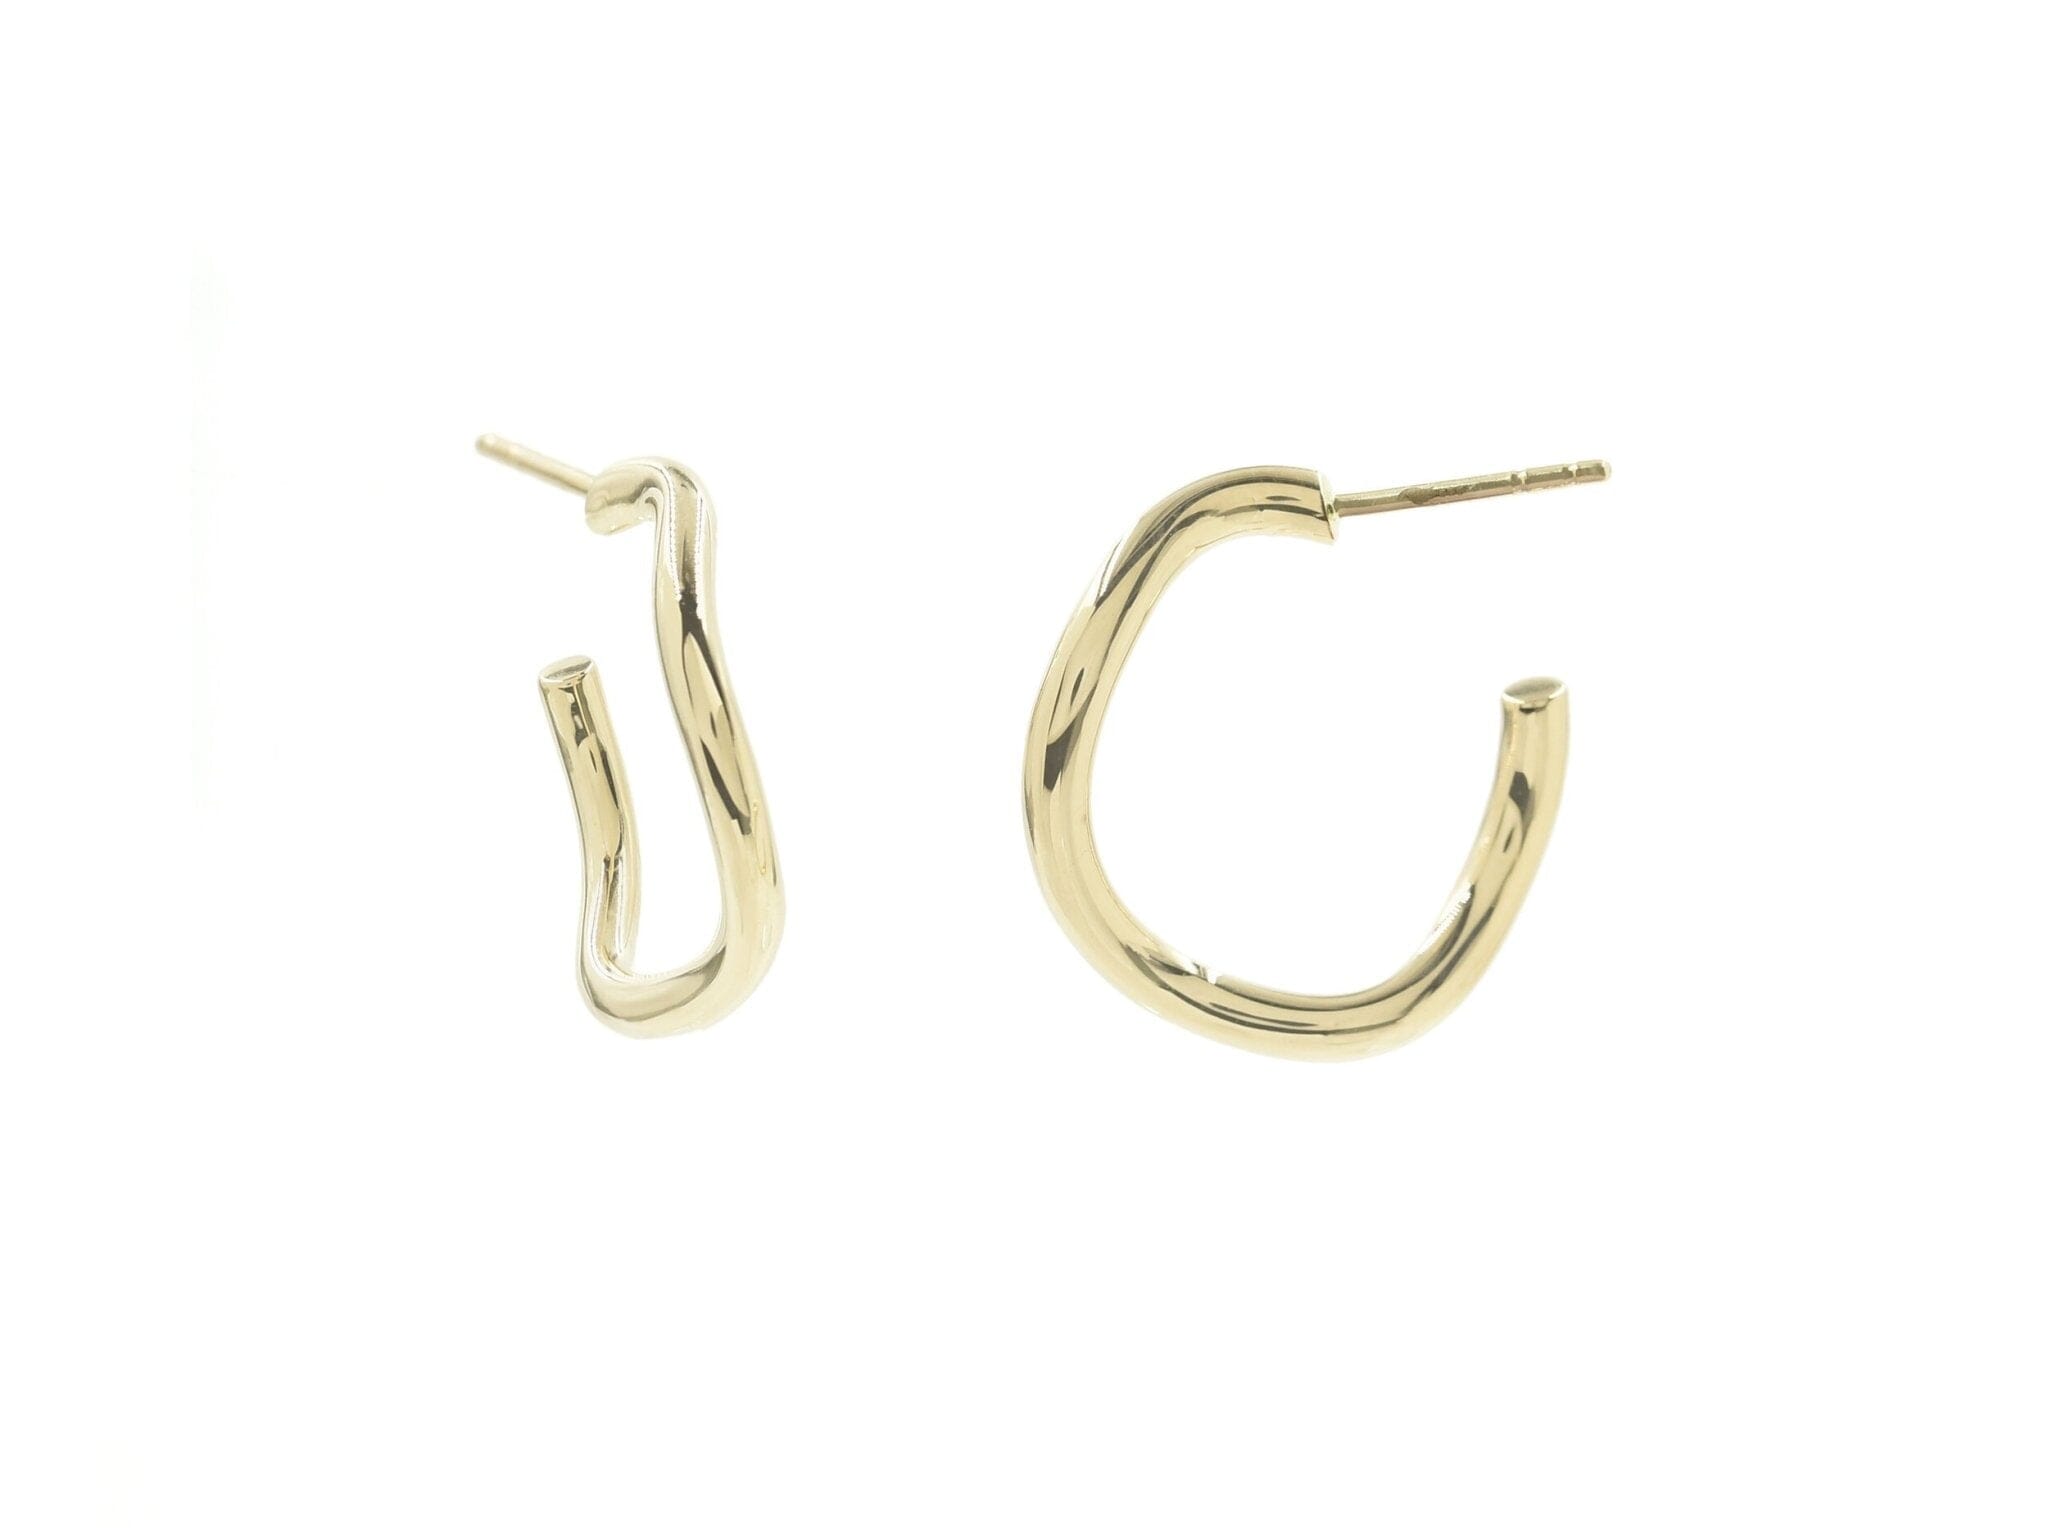 Golden Wave Hoops with Posts Earrings - BONDEYE JEWELRY ®